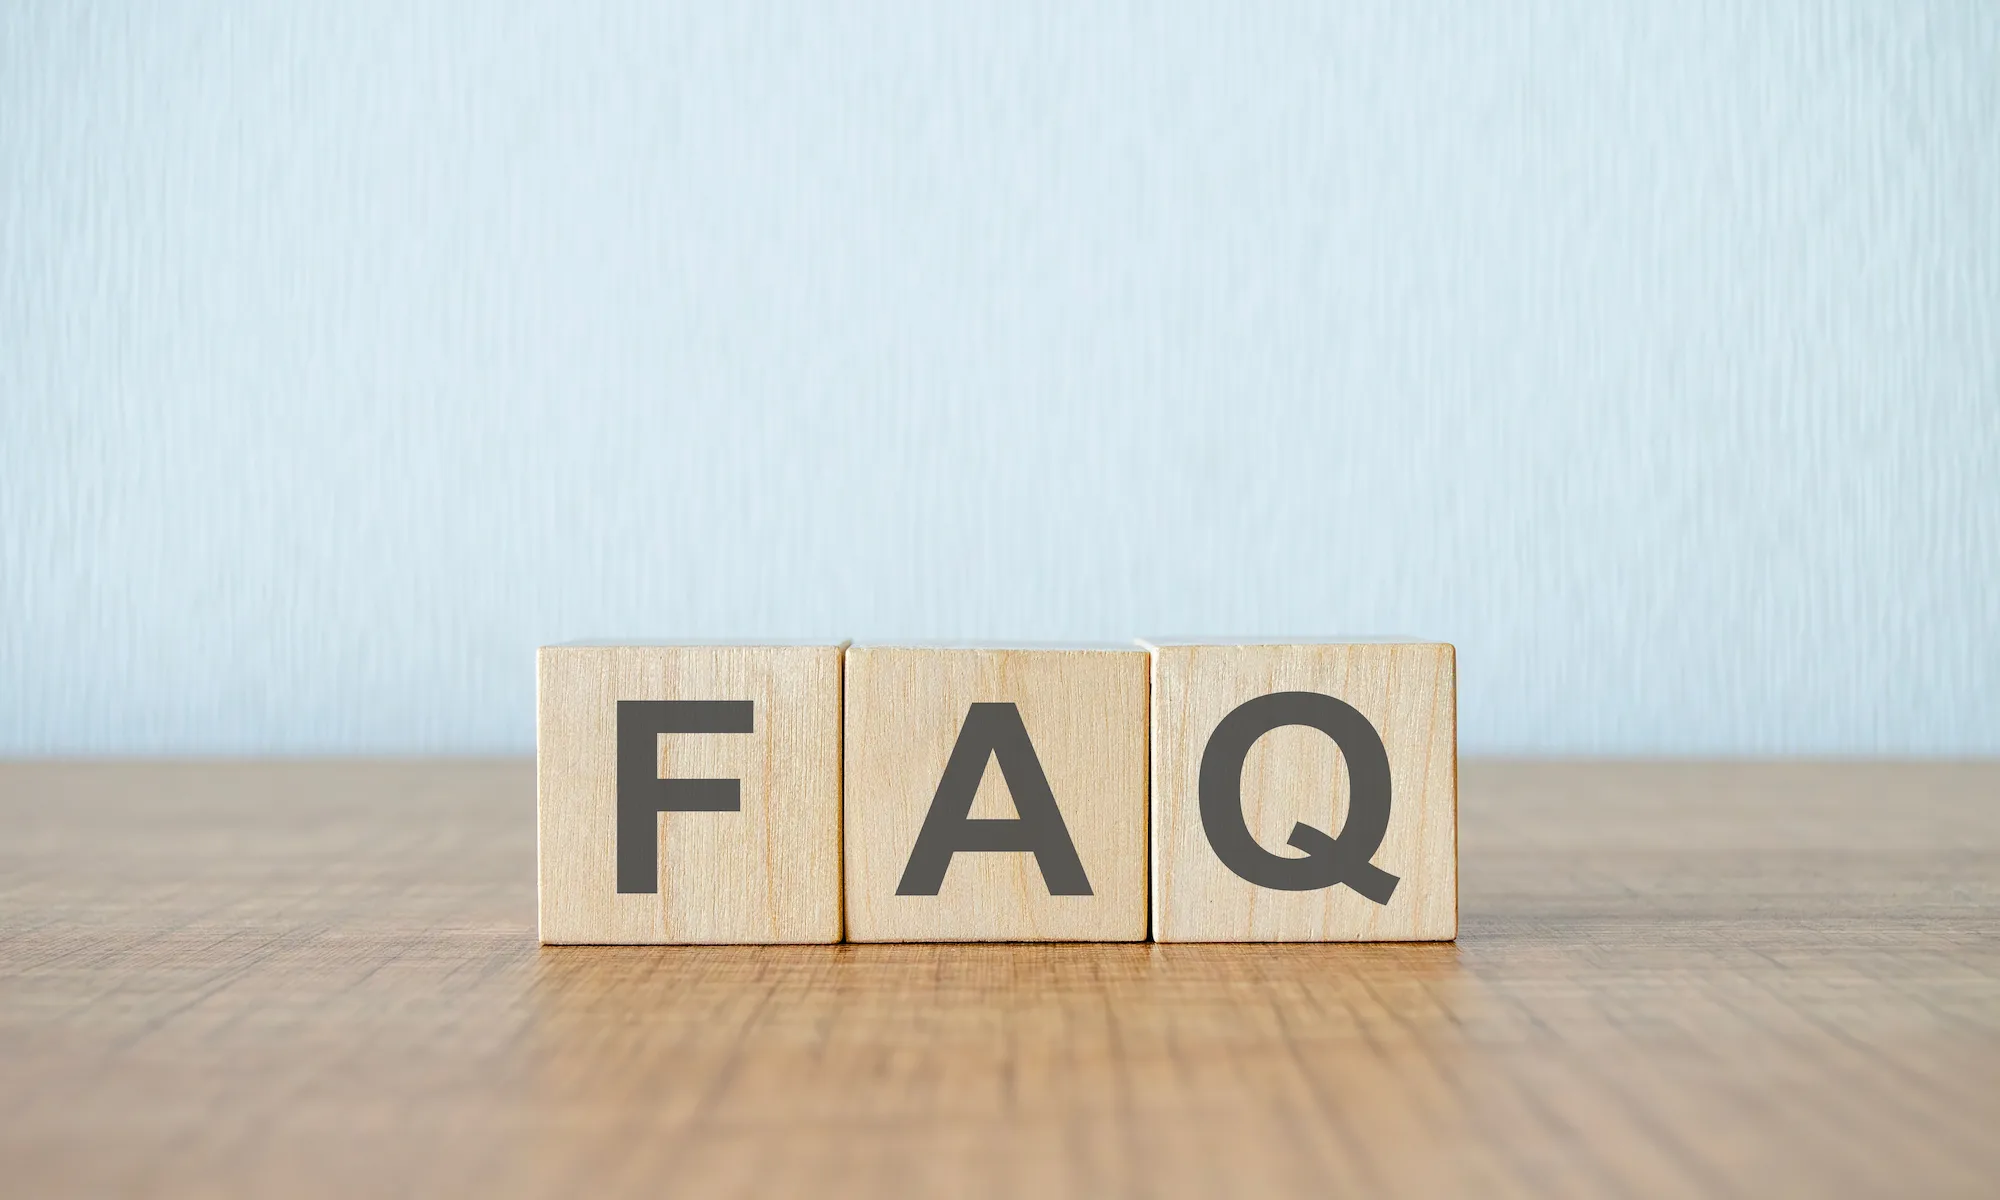 Blocks spelling out "FAQ"